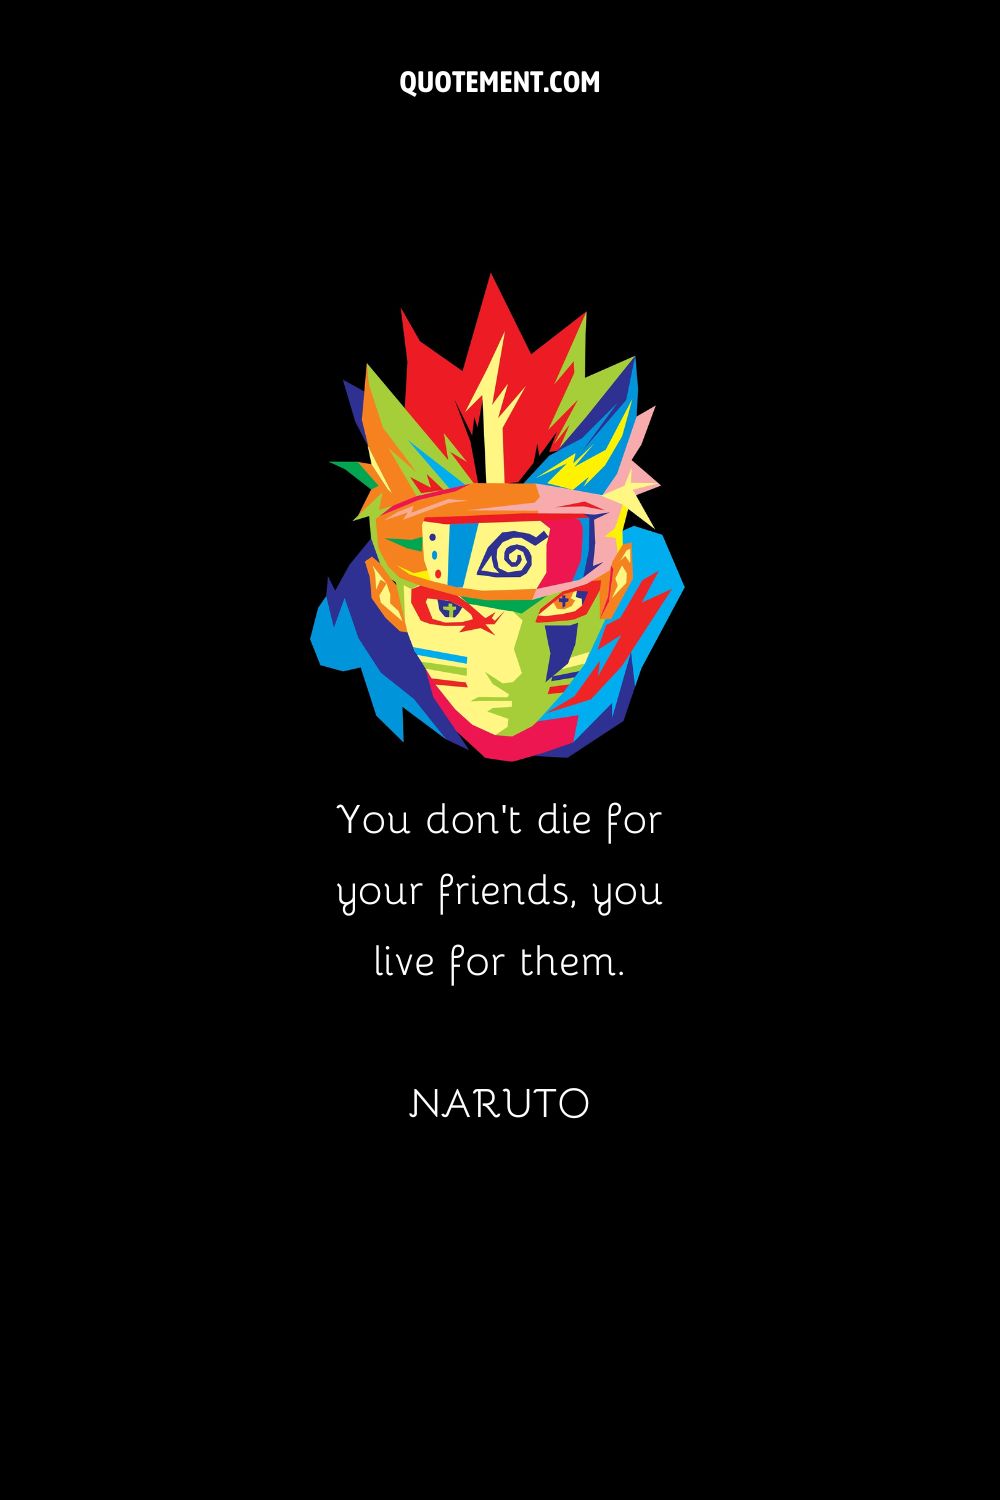 image of fierce Naruto's face representing Naruto friendship quote